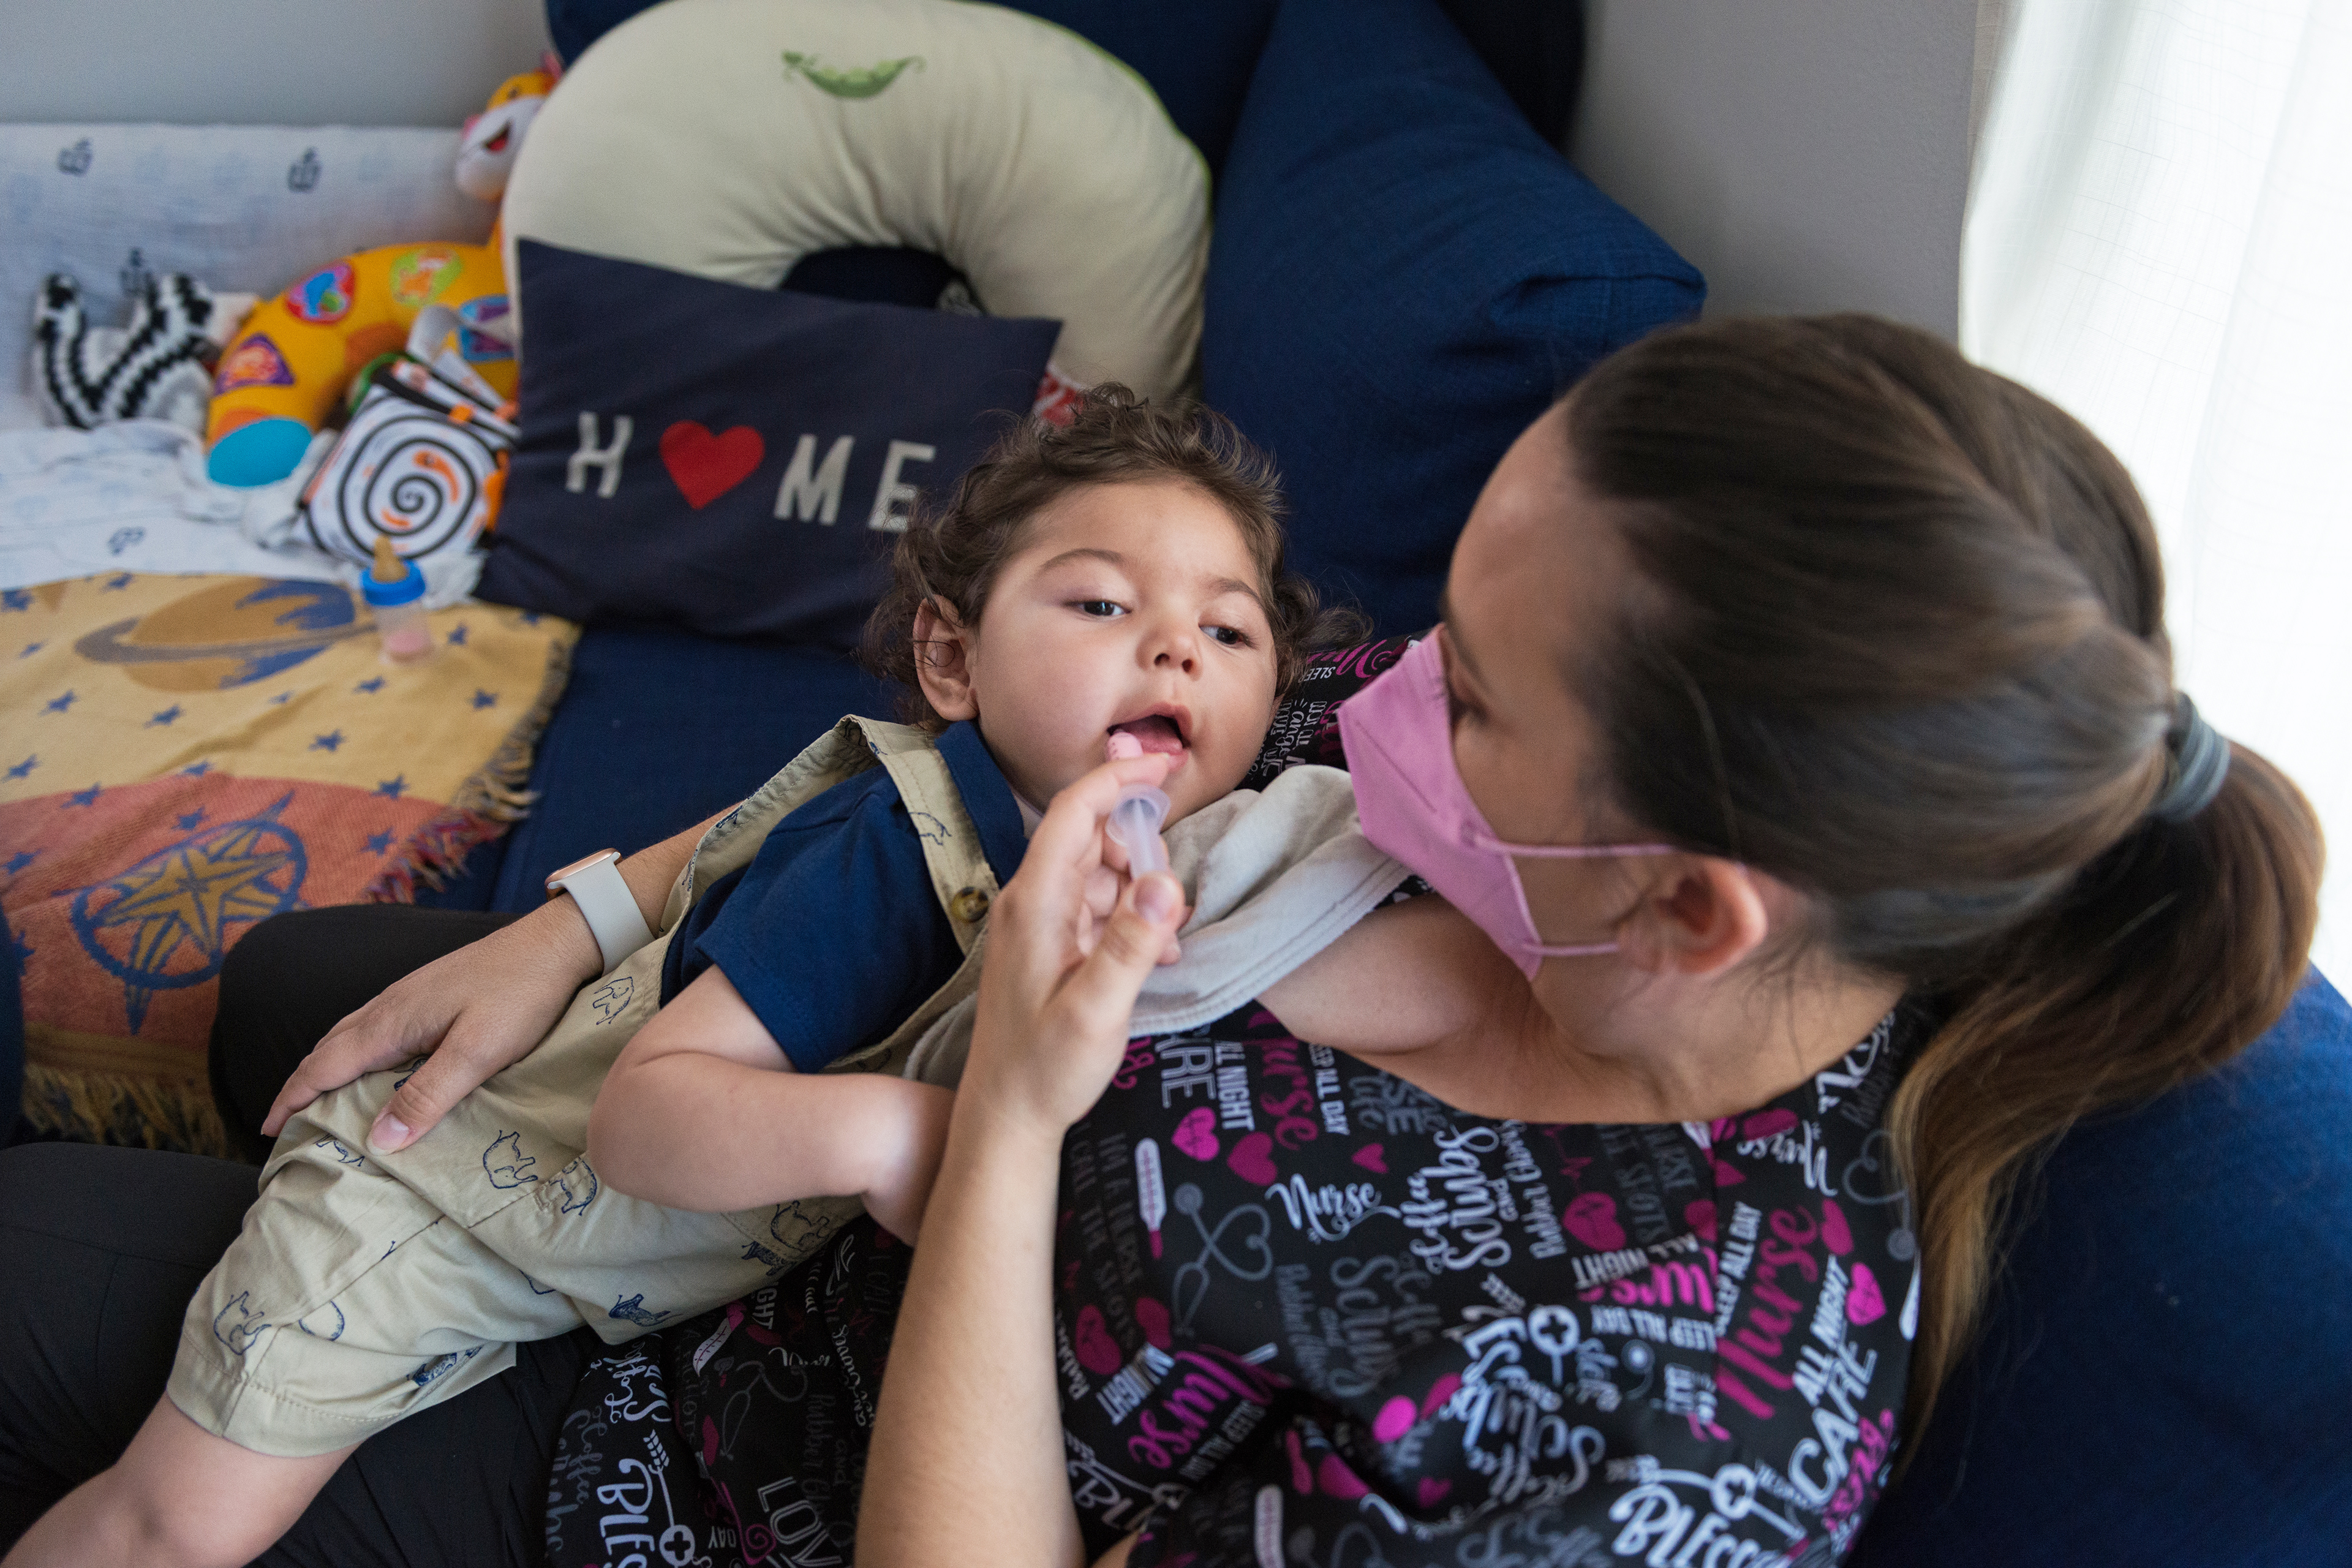 A photo shows a nurse giving 17-month-old Aaron Martinez medicine via an oral syringe.